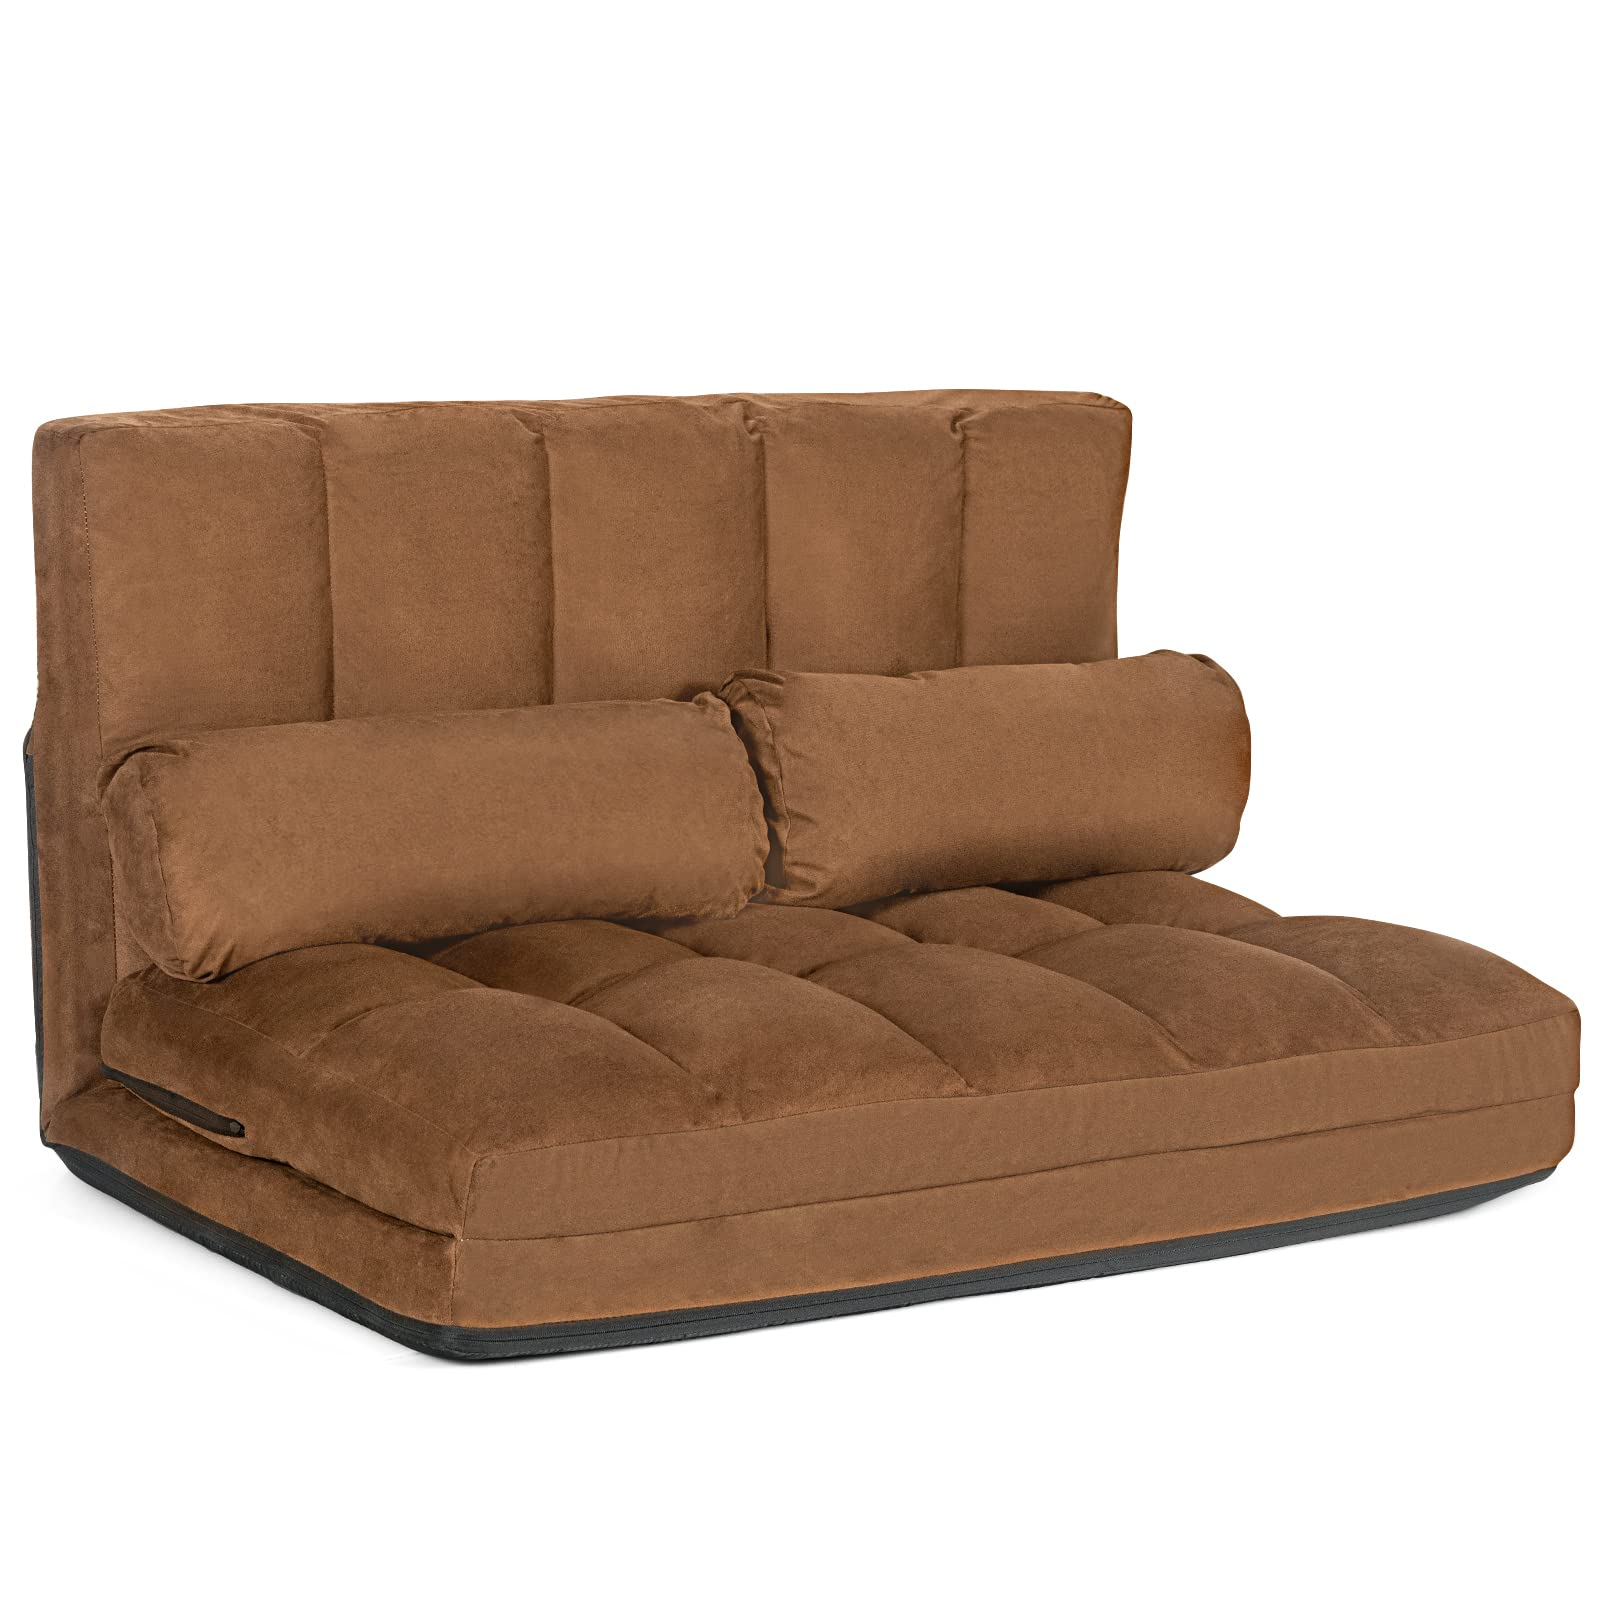 Adjustable Floor Sofa, Foldable Lazy Sofa Sleeper Bed 6-Position Adjustable,2 Pillows